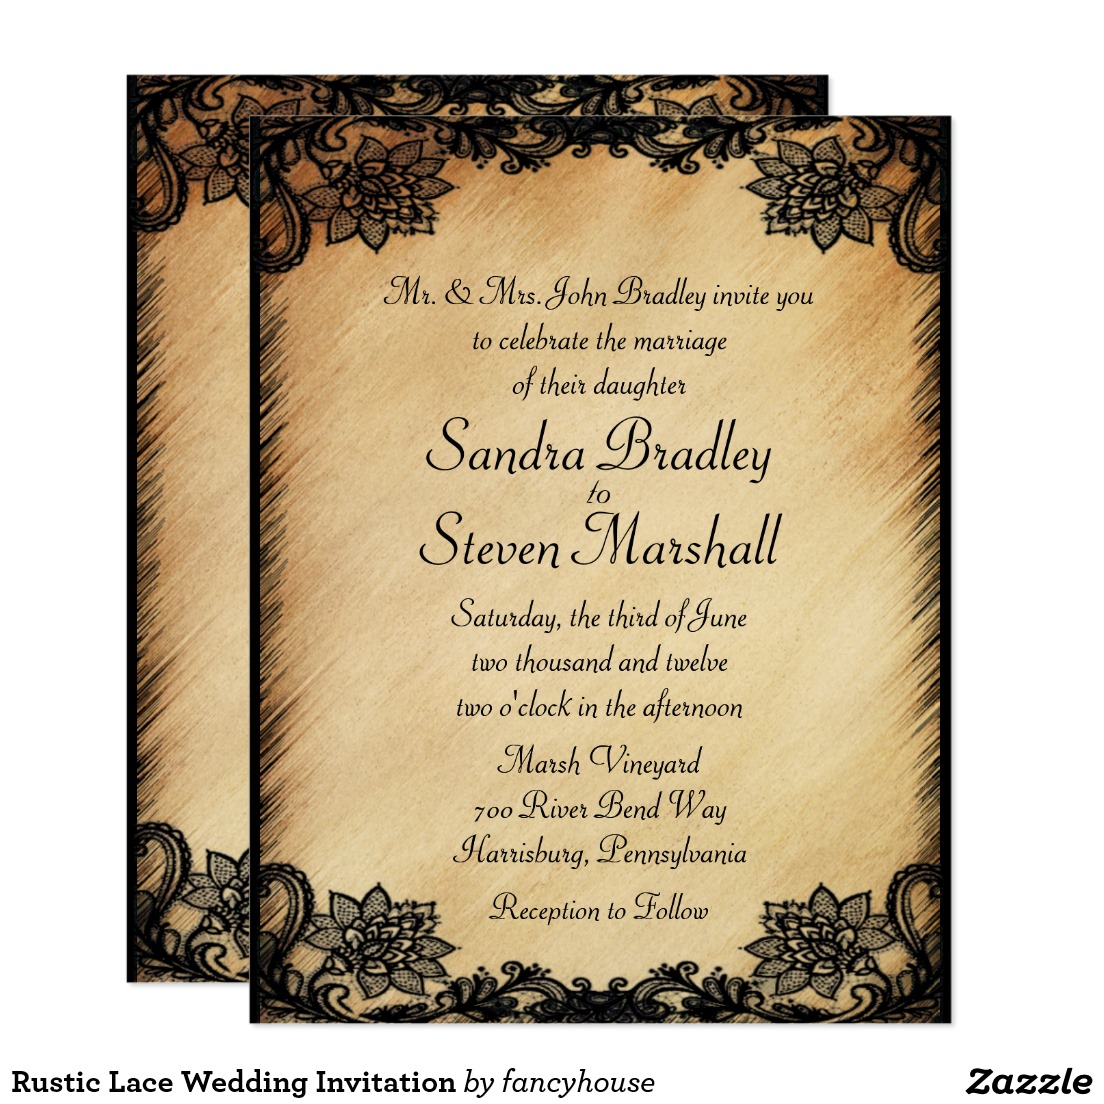 Rustic Lace Wedding Invitation